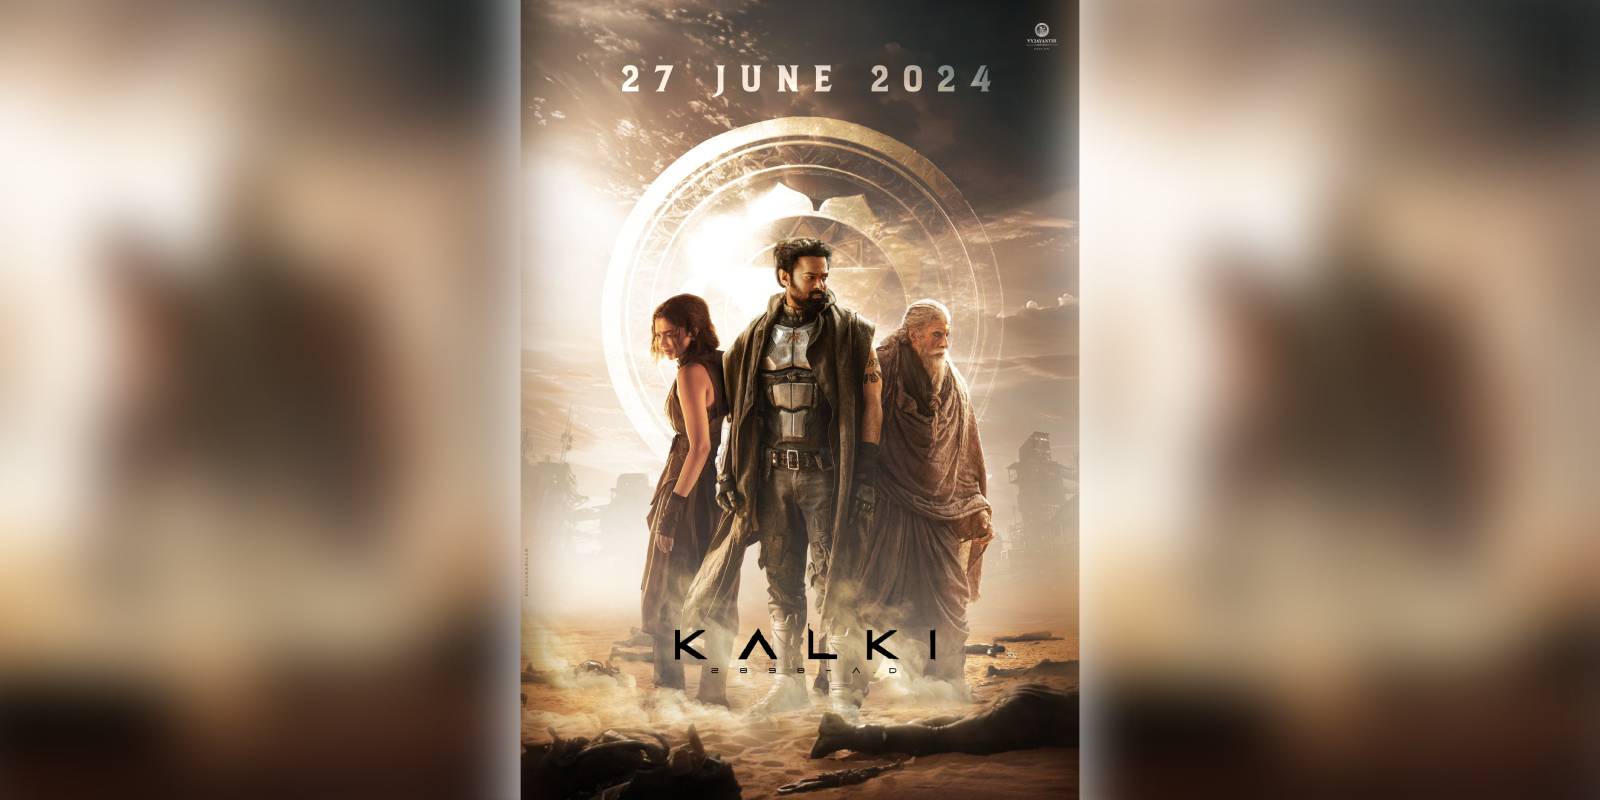 Kalki 2898-AD release date announced